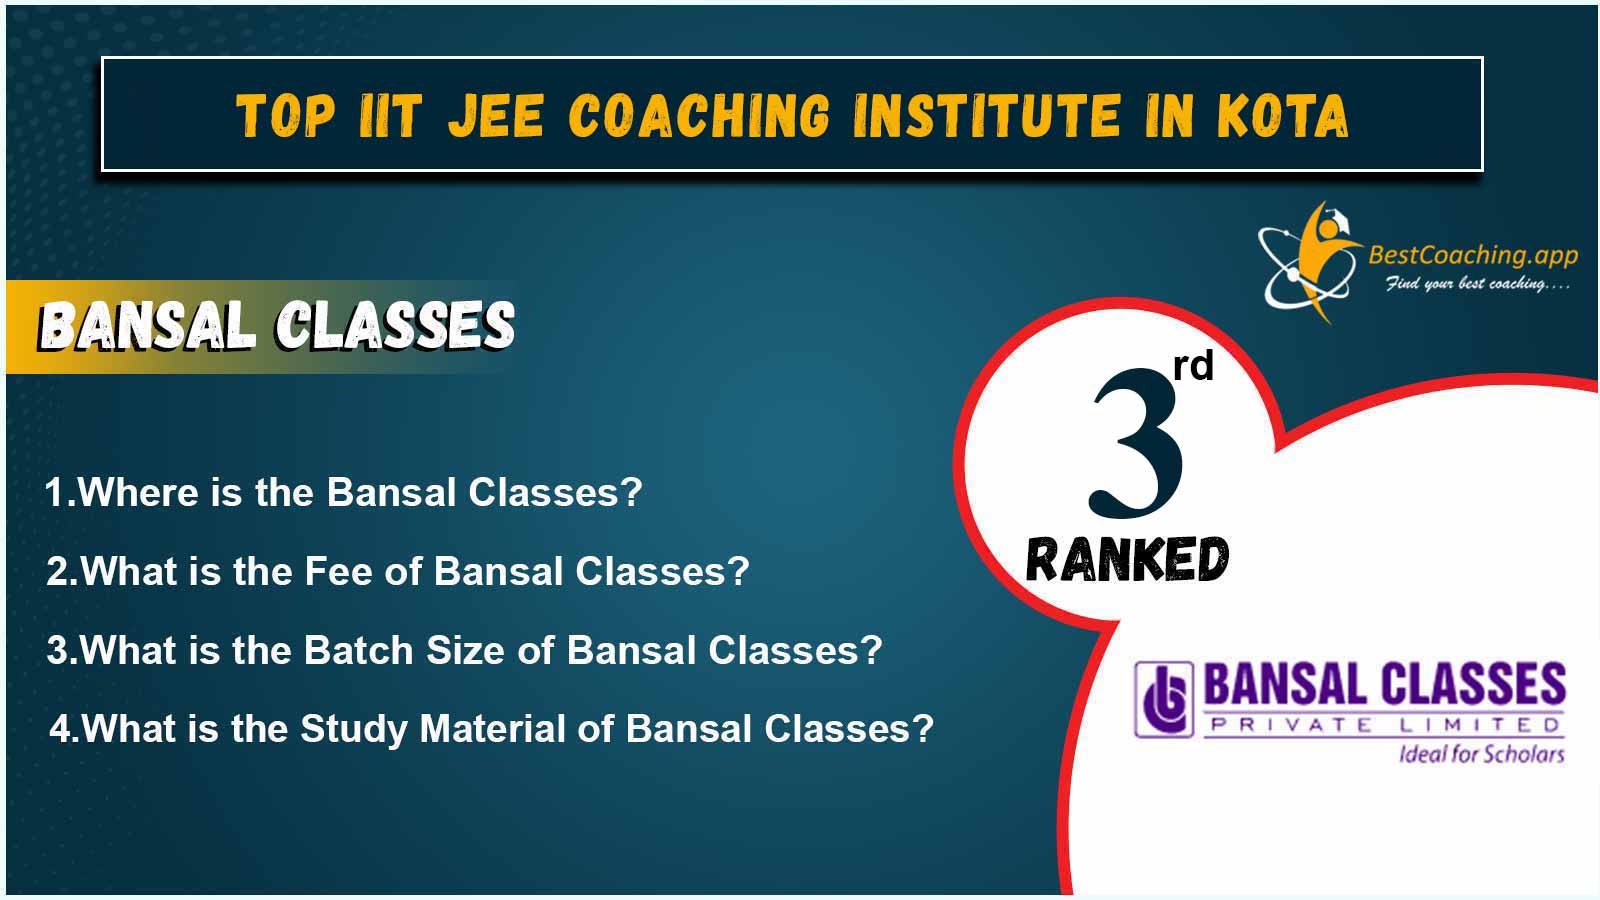 Top IIT JEE Coaching Centers In Kota